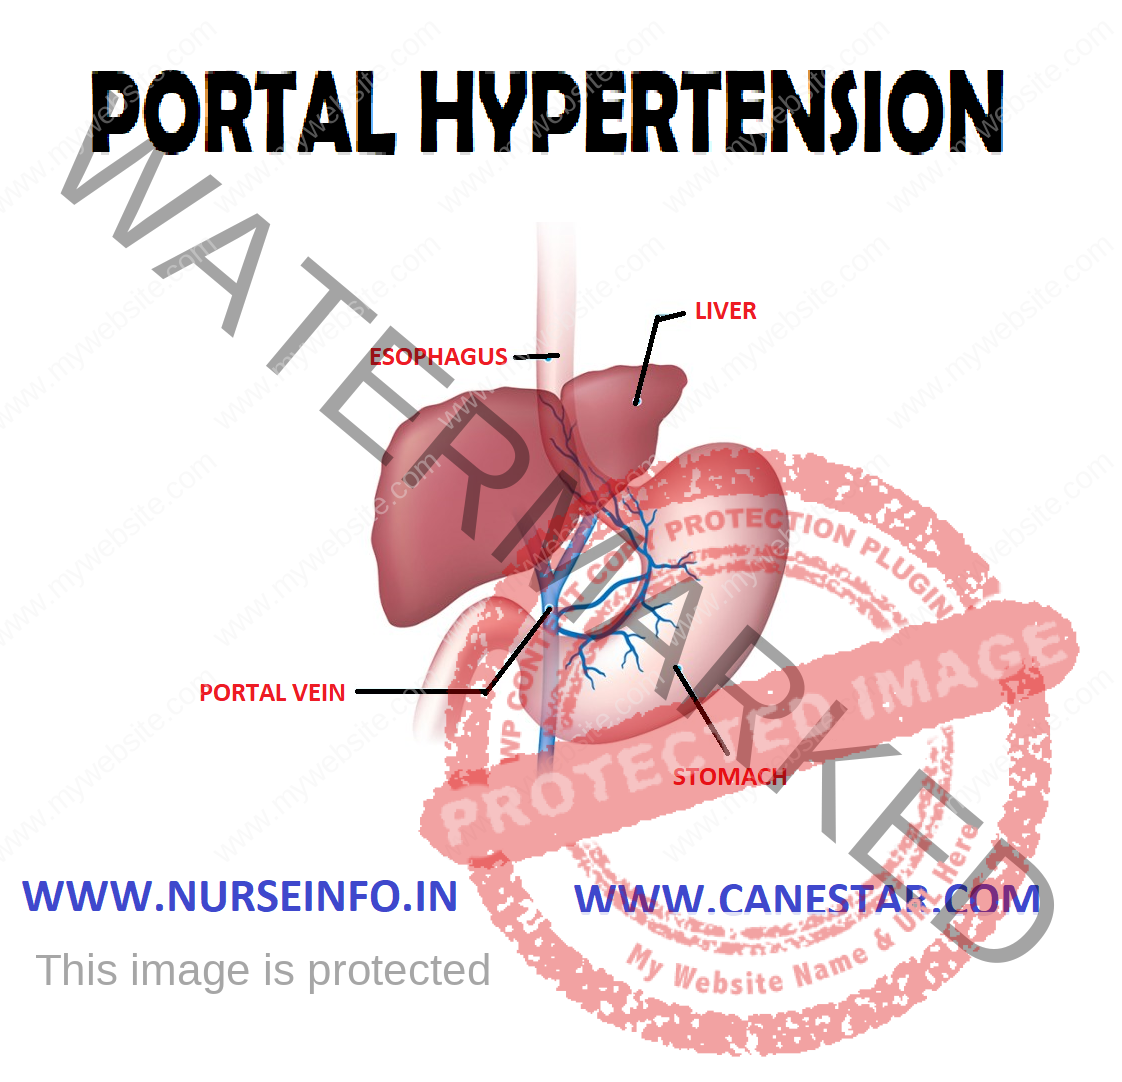 first presentation of portal hypertension